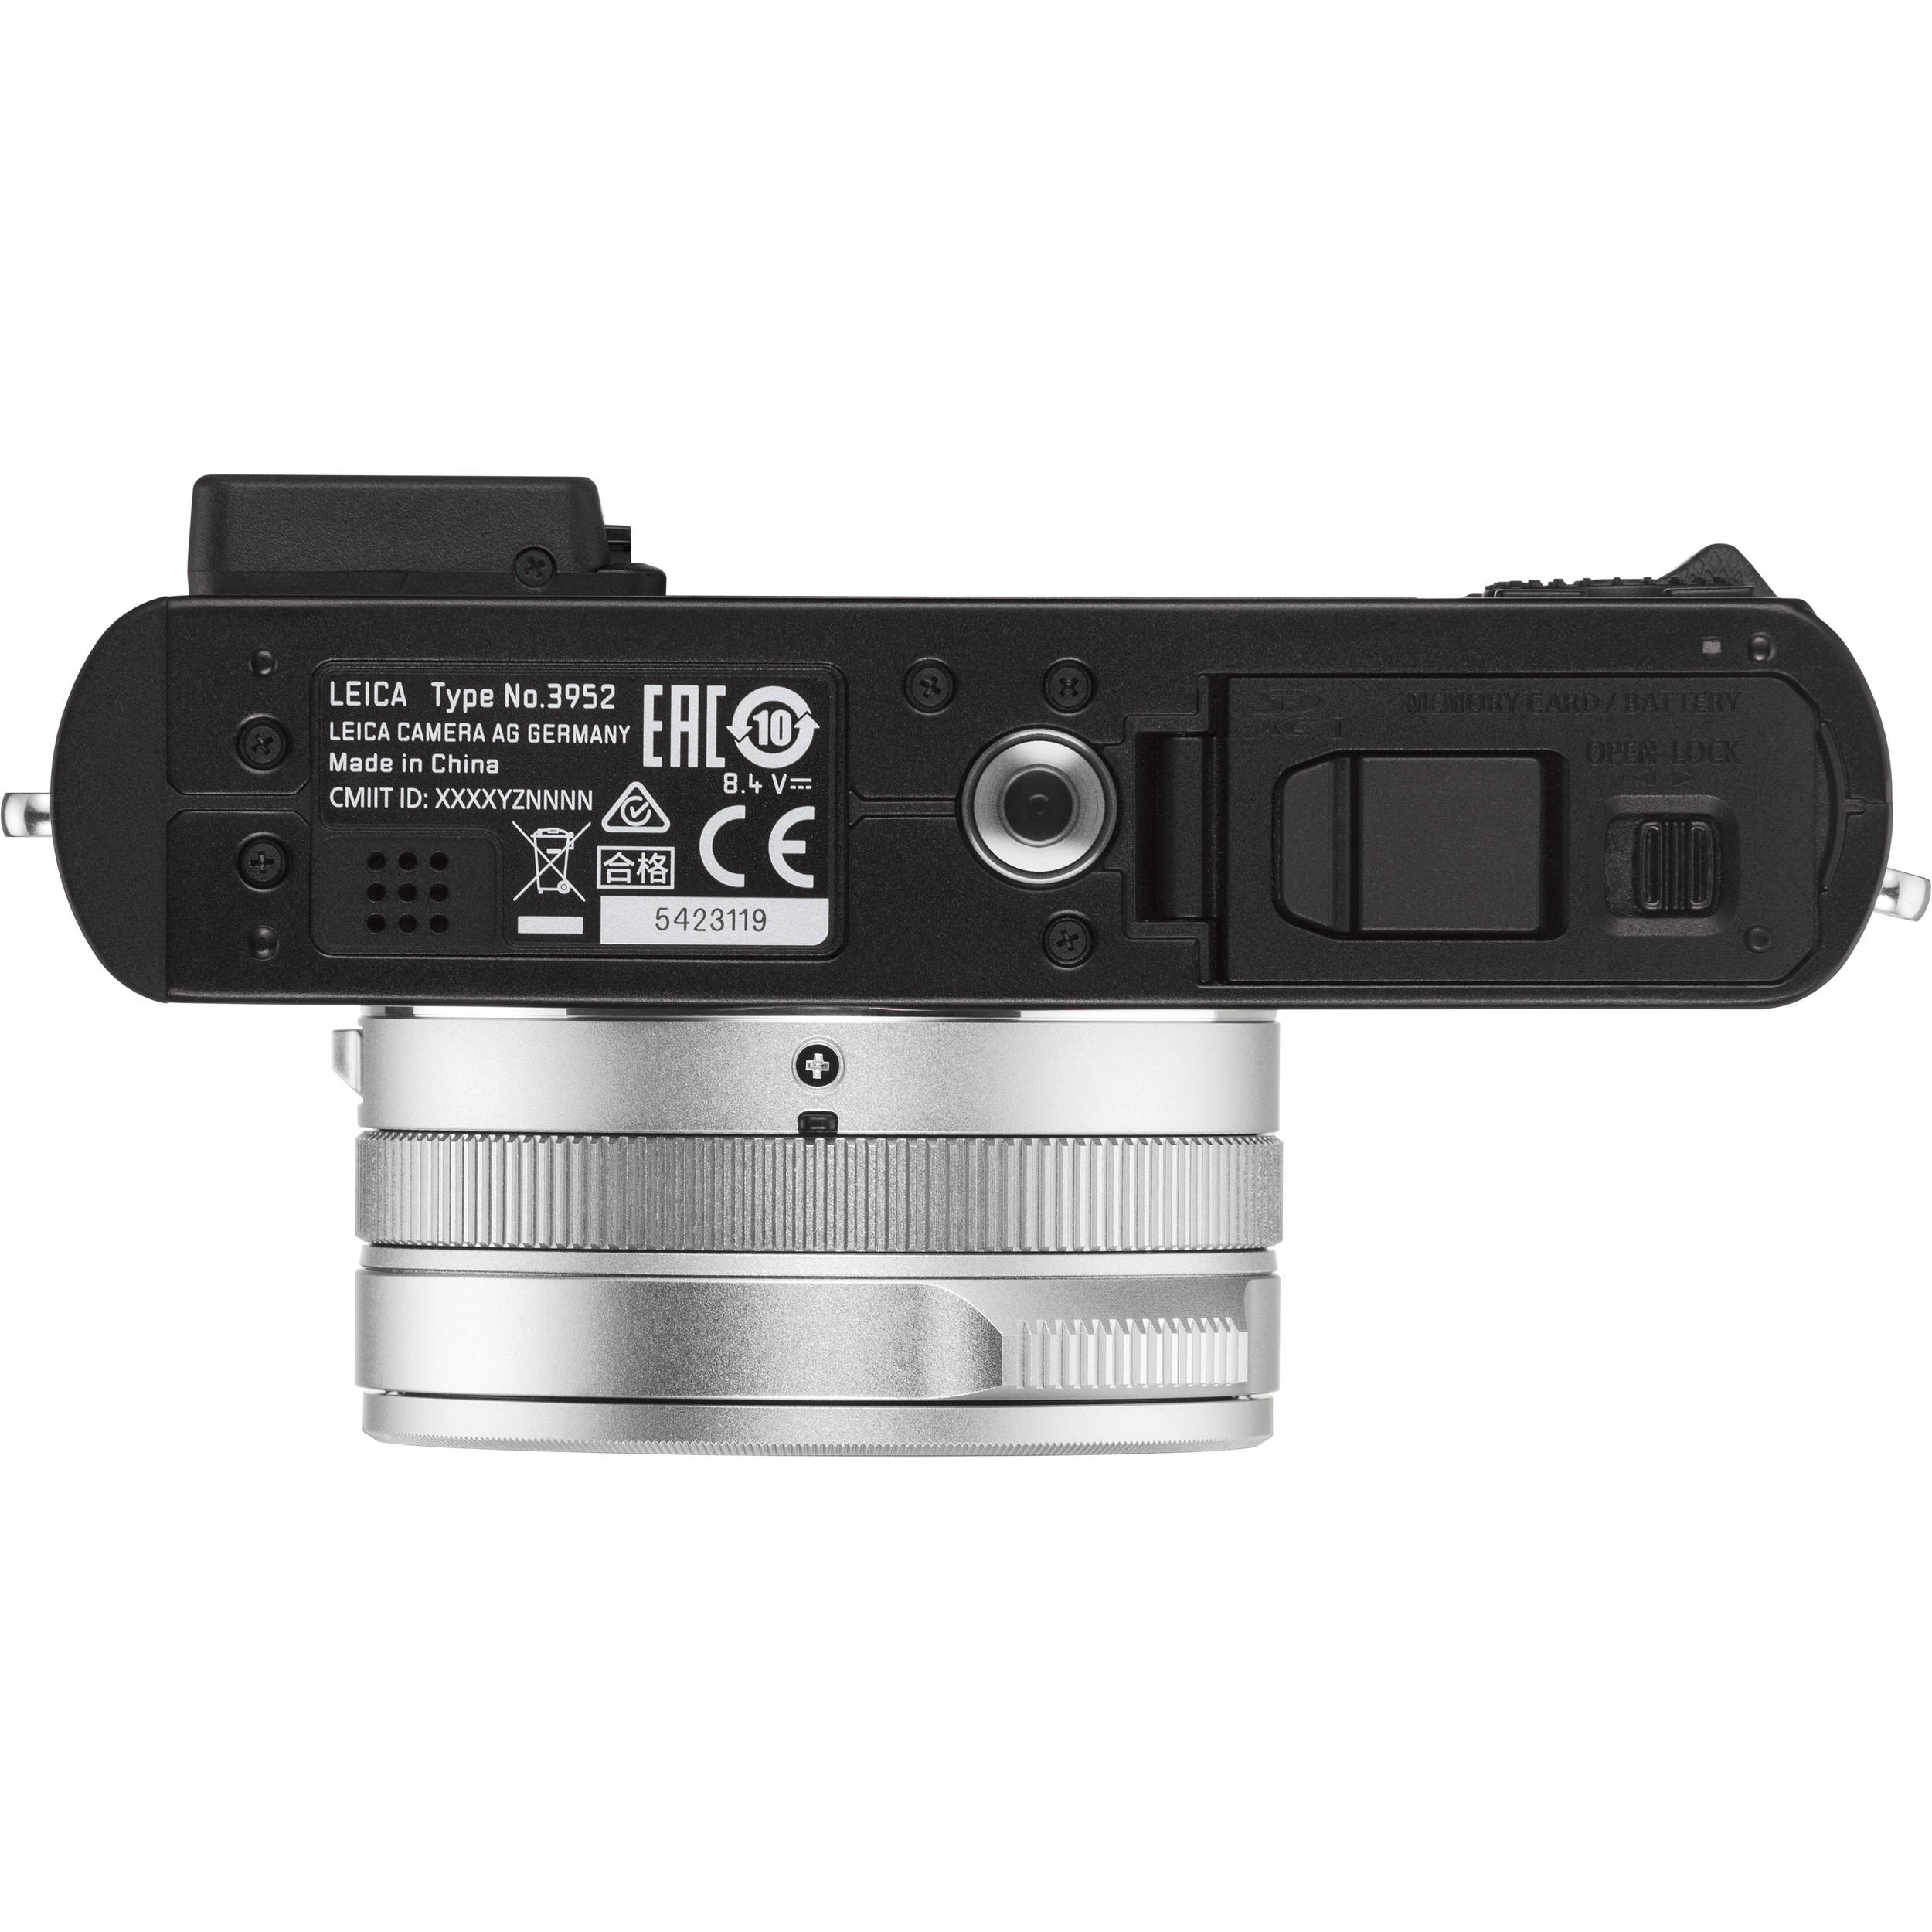 Leica D-Lux 7 - Leica Camera Shop